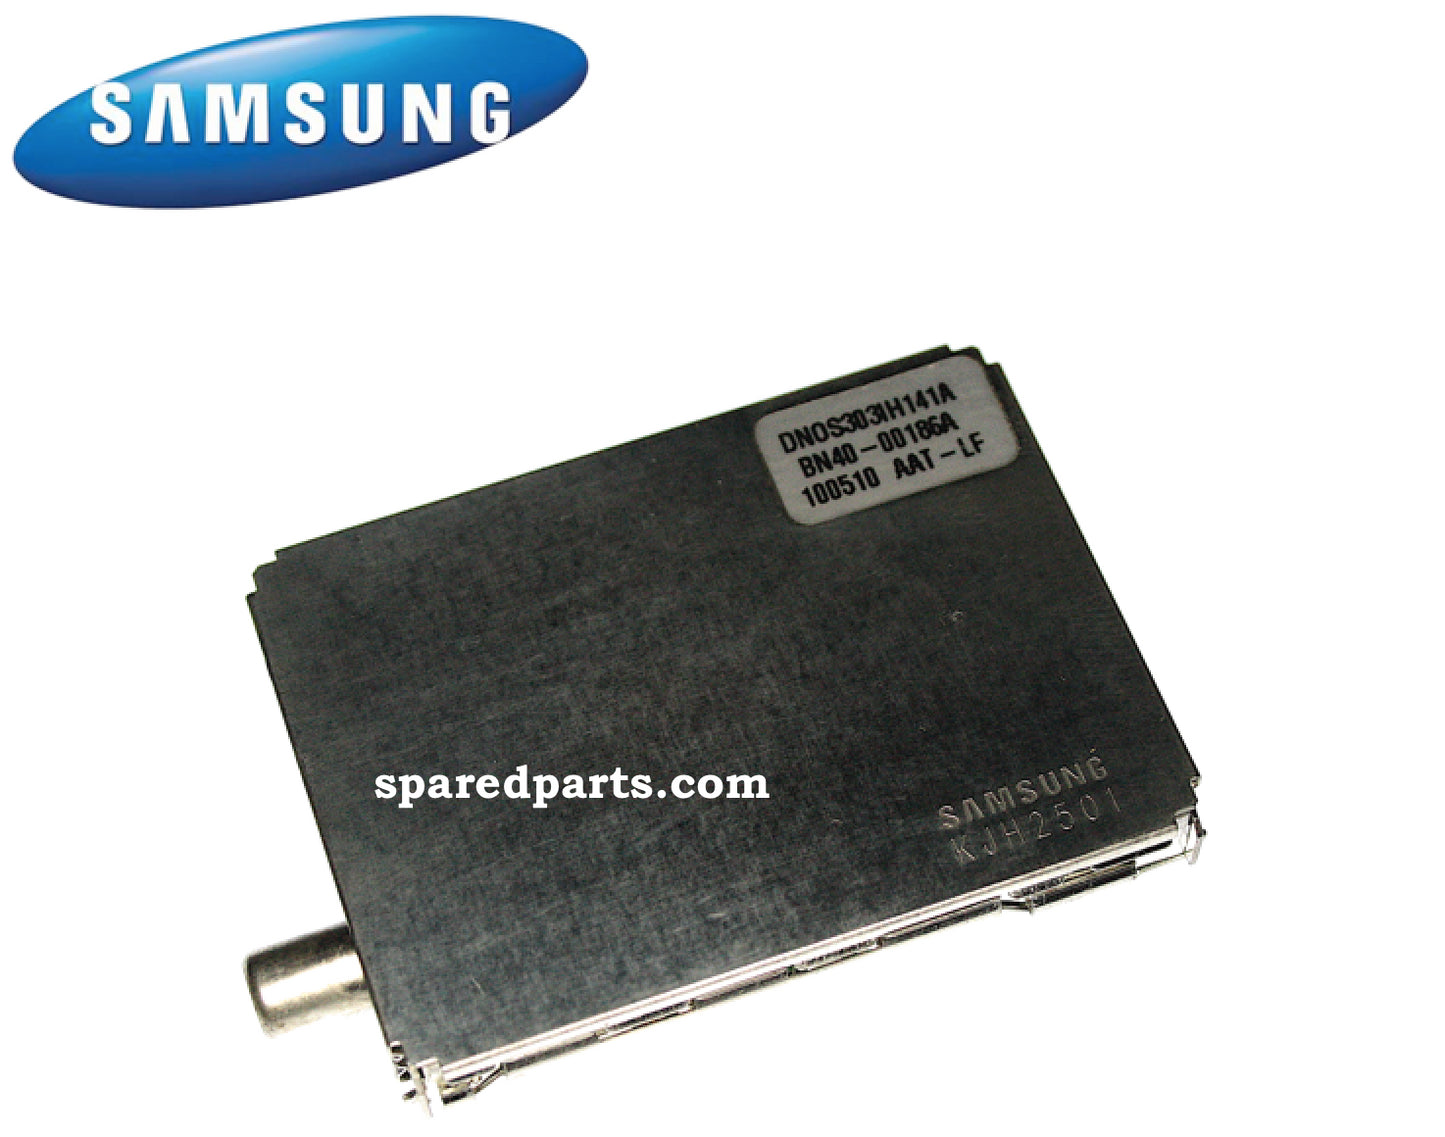 Samsung Tuner Unit BN40-00186A DNOS303IH141A